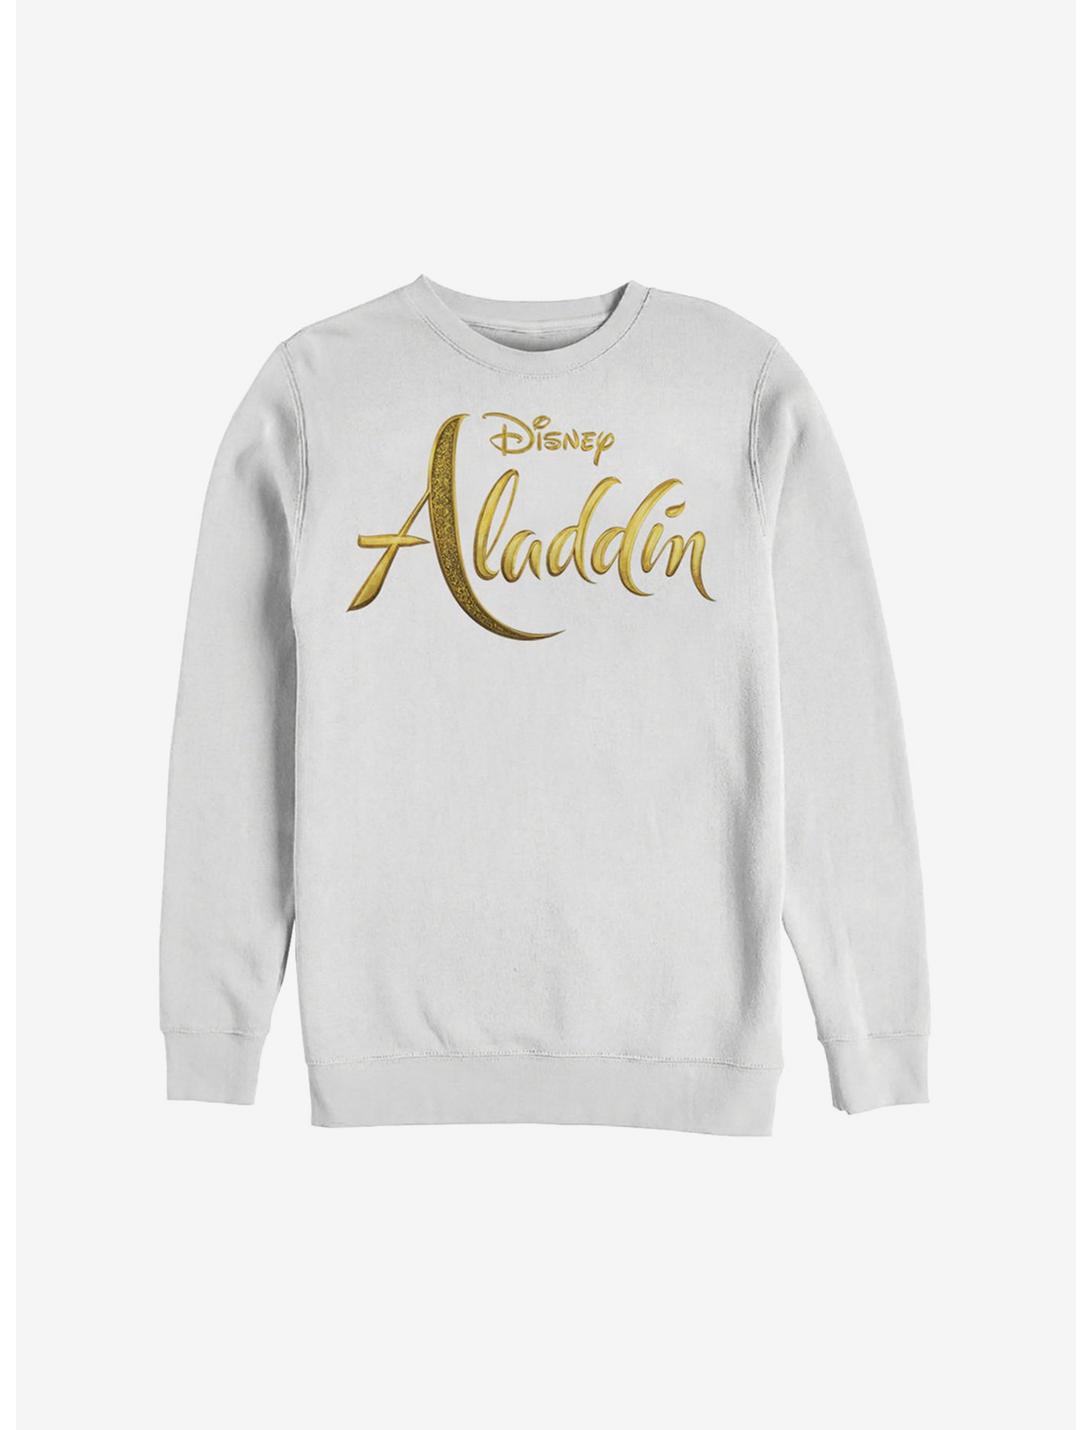 Disney Aladdin 2019 Live Action Logo Sweatshirt, WHITE, hi-res